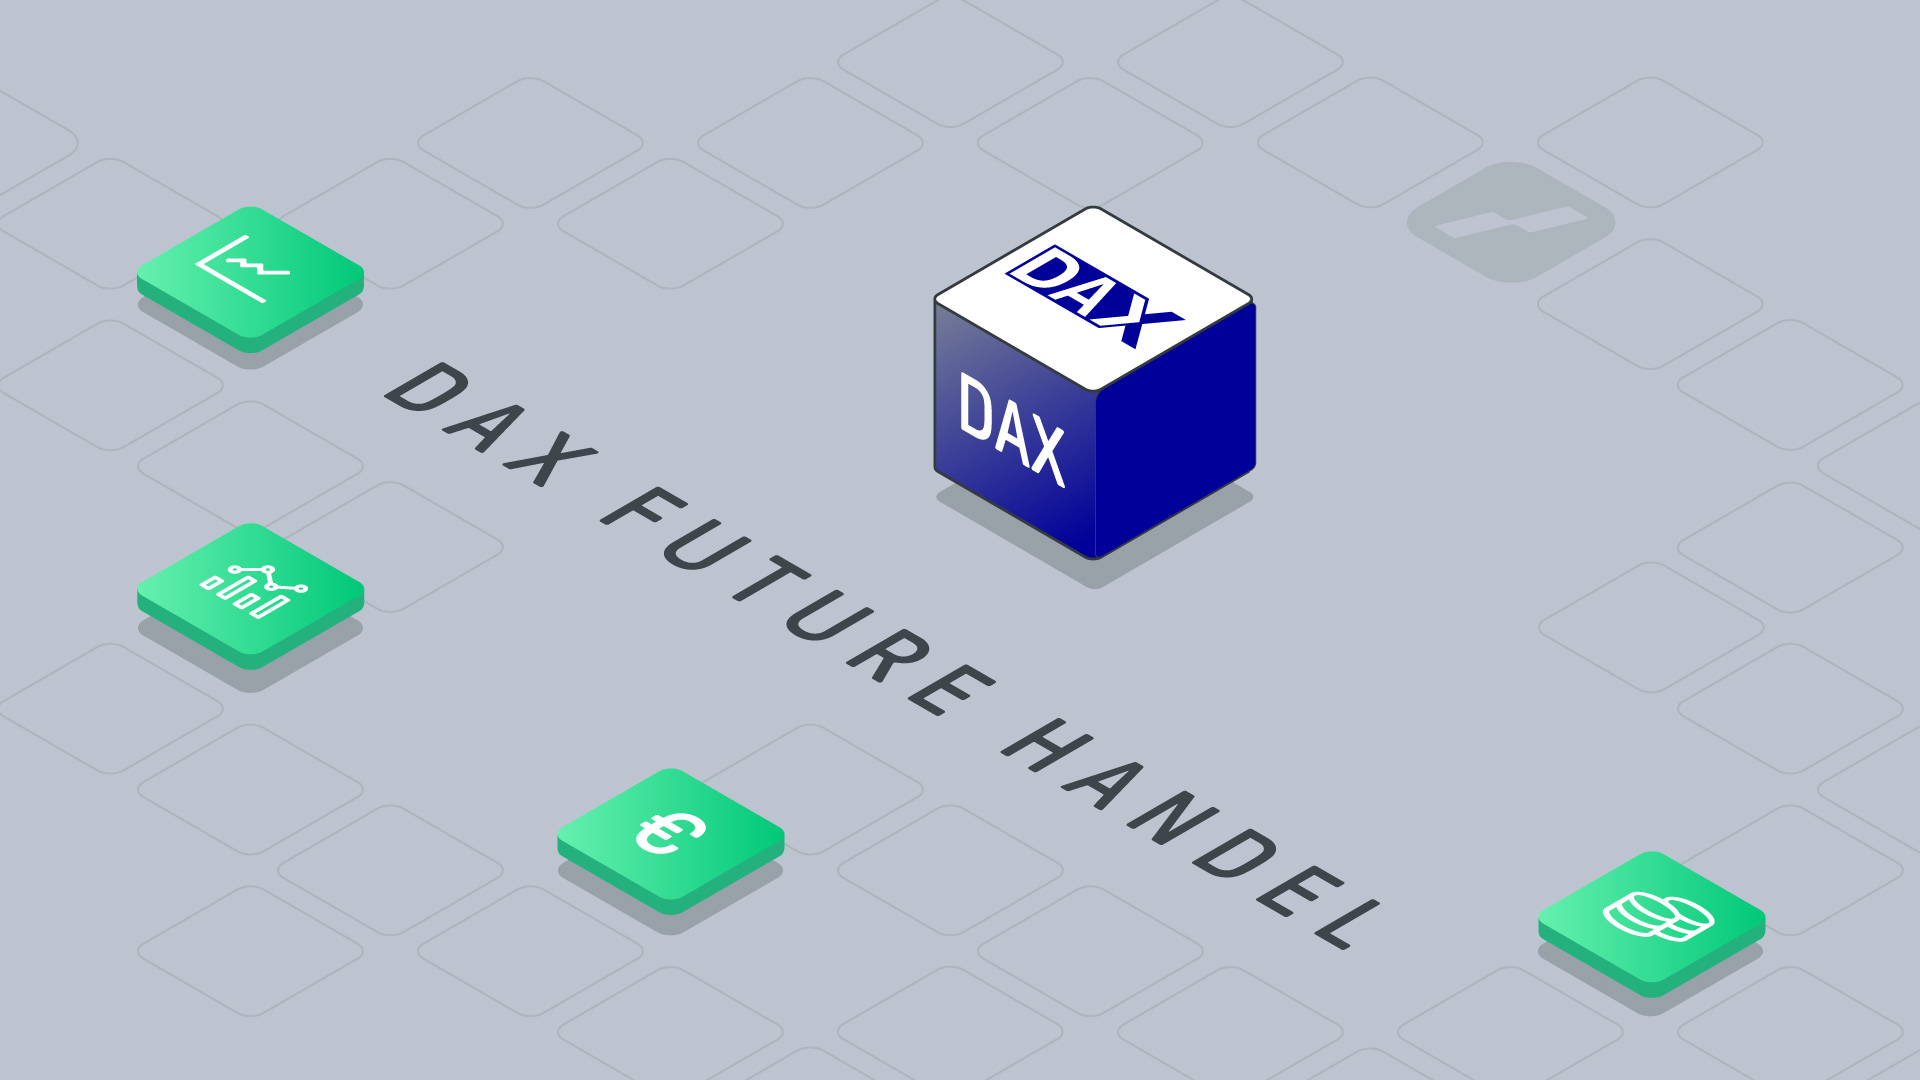 Dax future